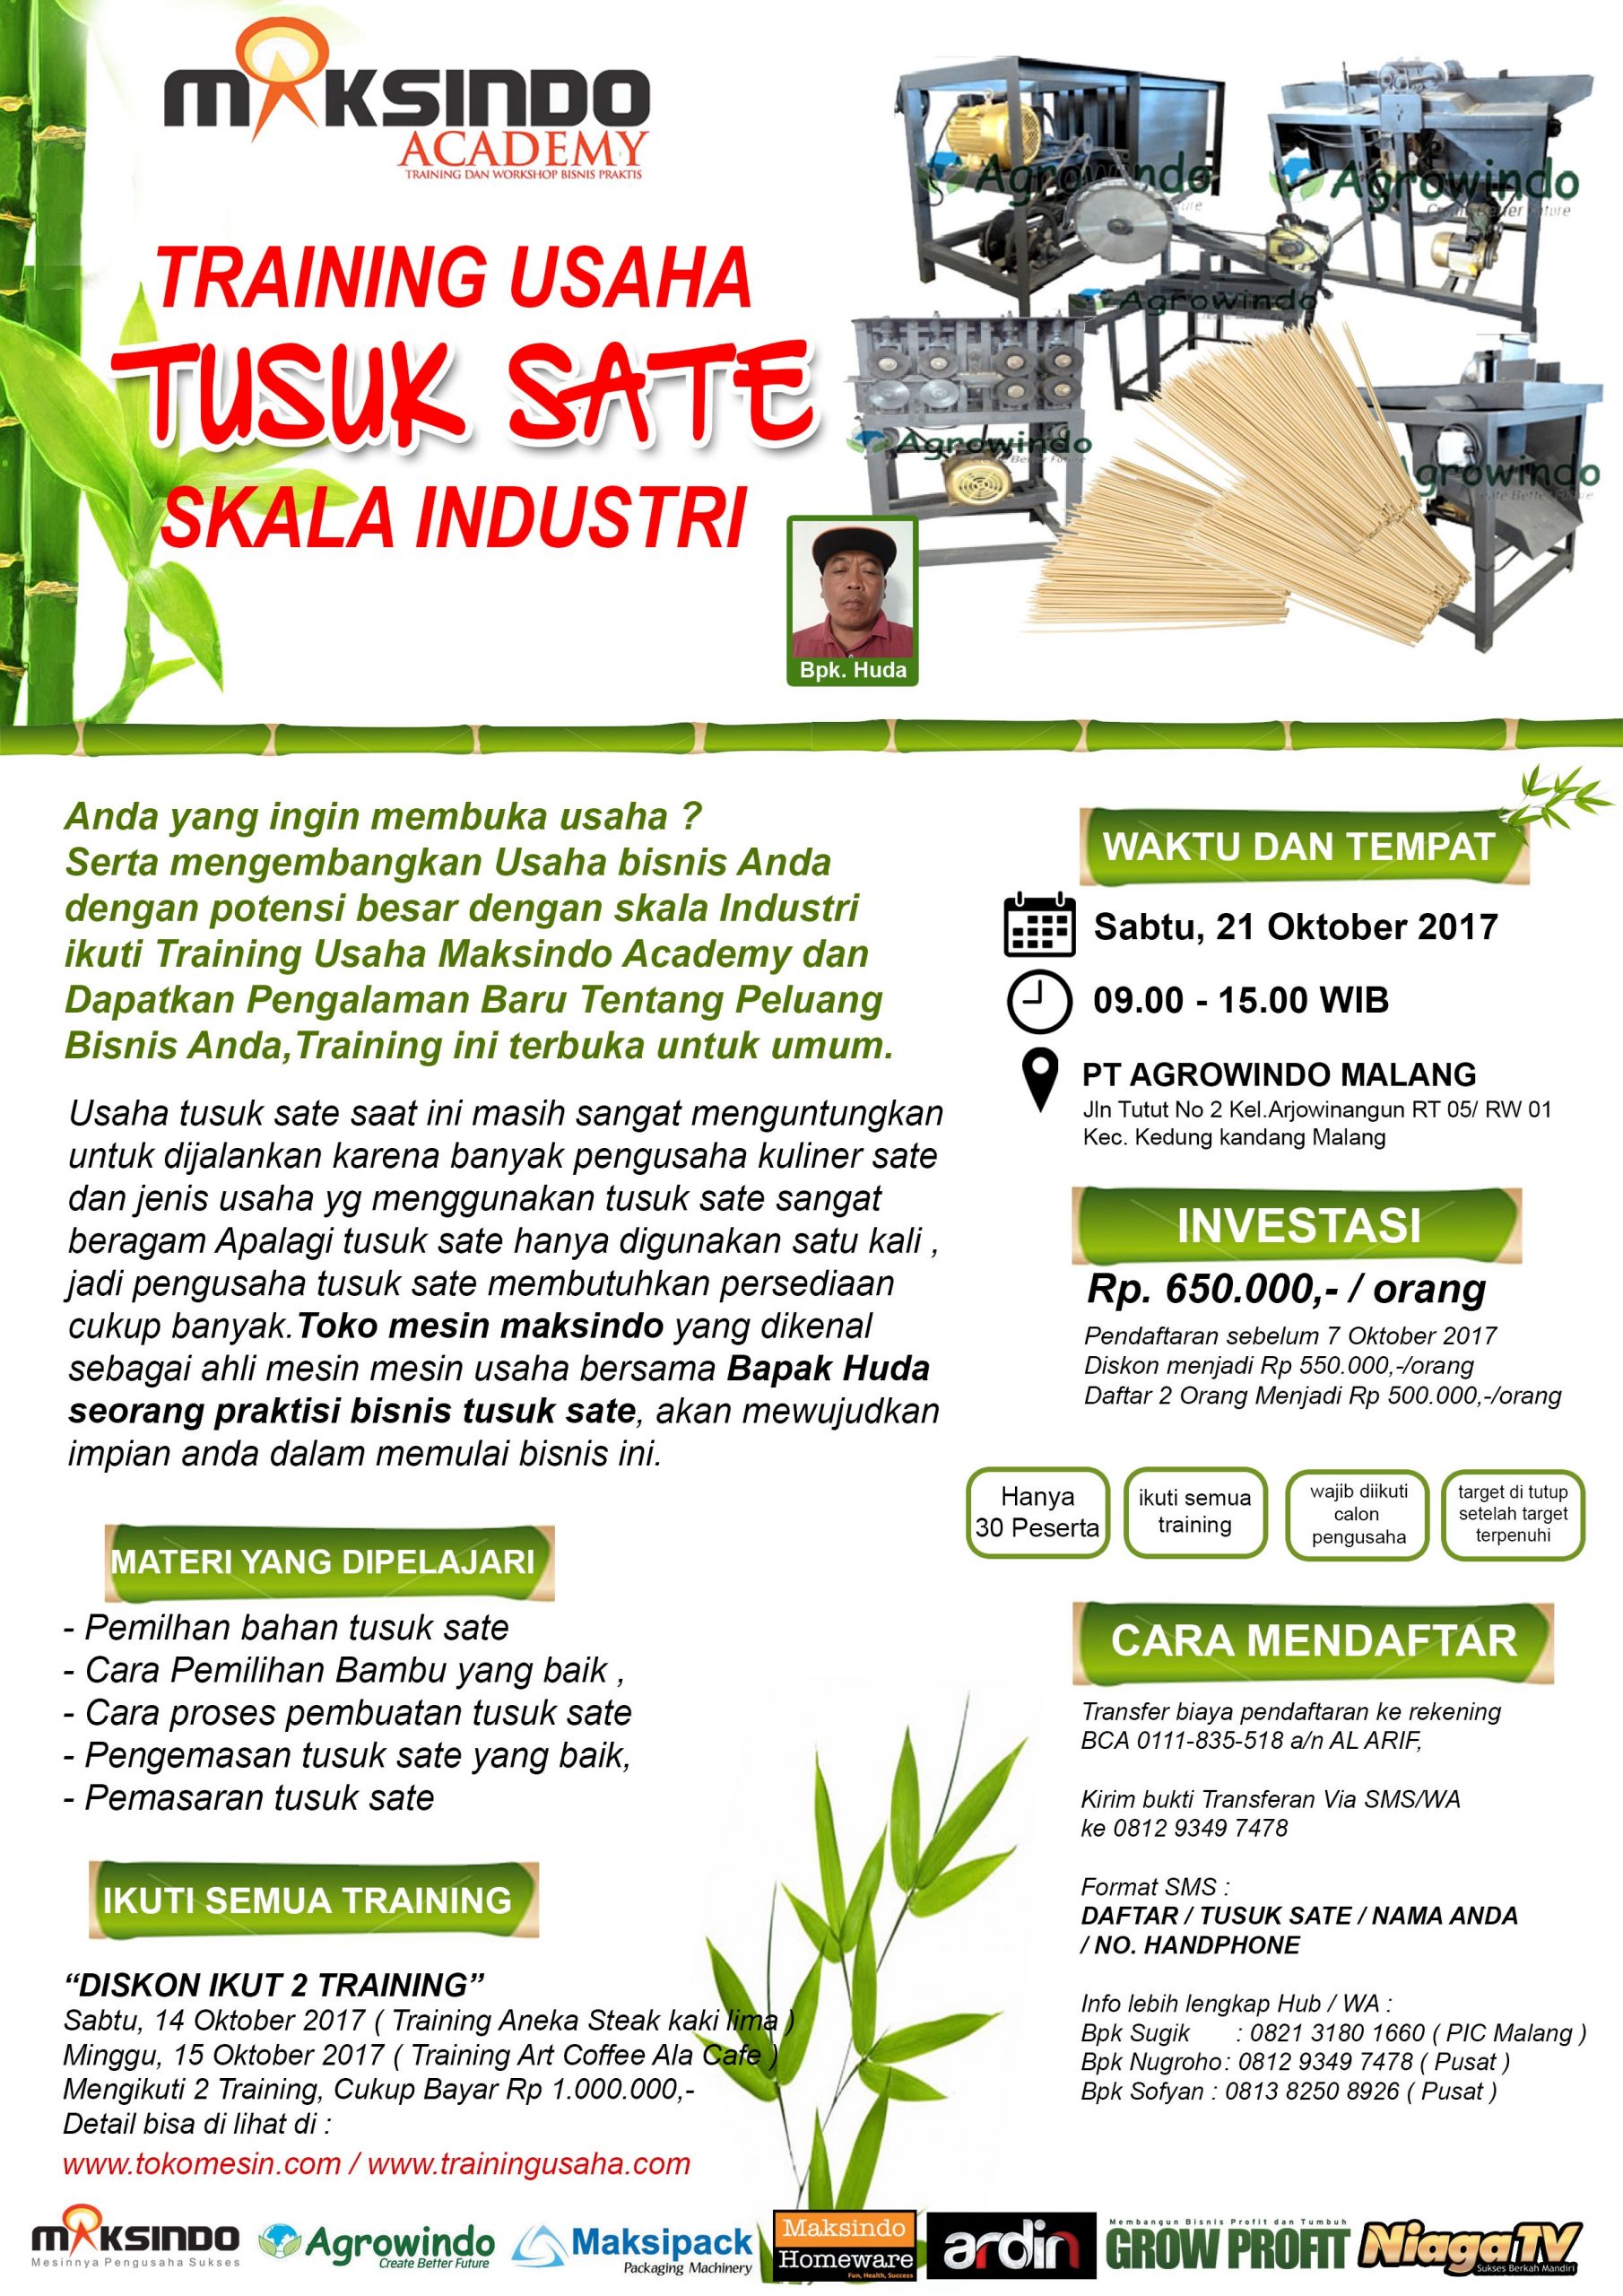 Training Usaha Tusuk Sate, 21 Oktober 2017